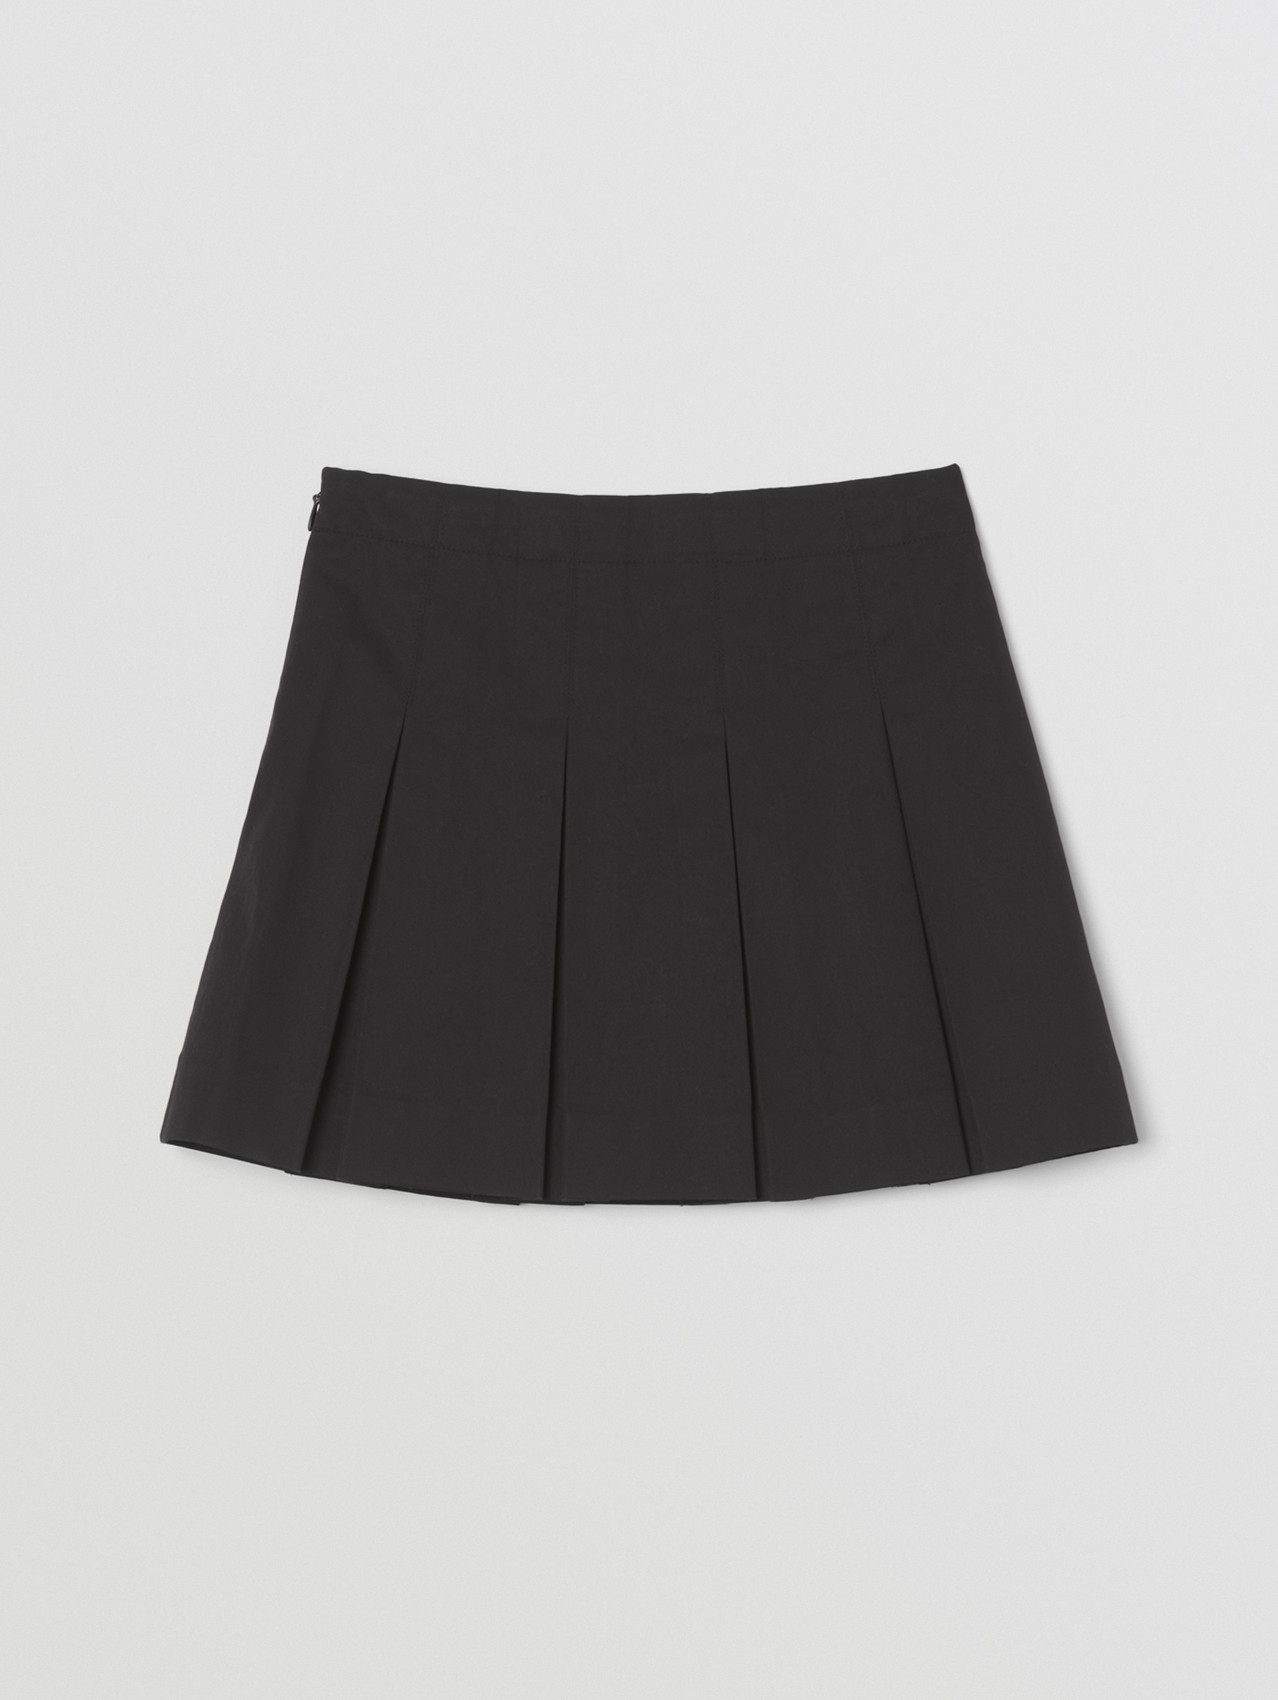 Monogram Motif Pleated Cotton Twill Skirt in Black